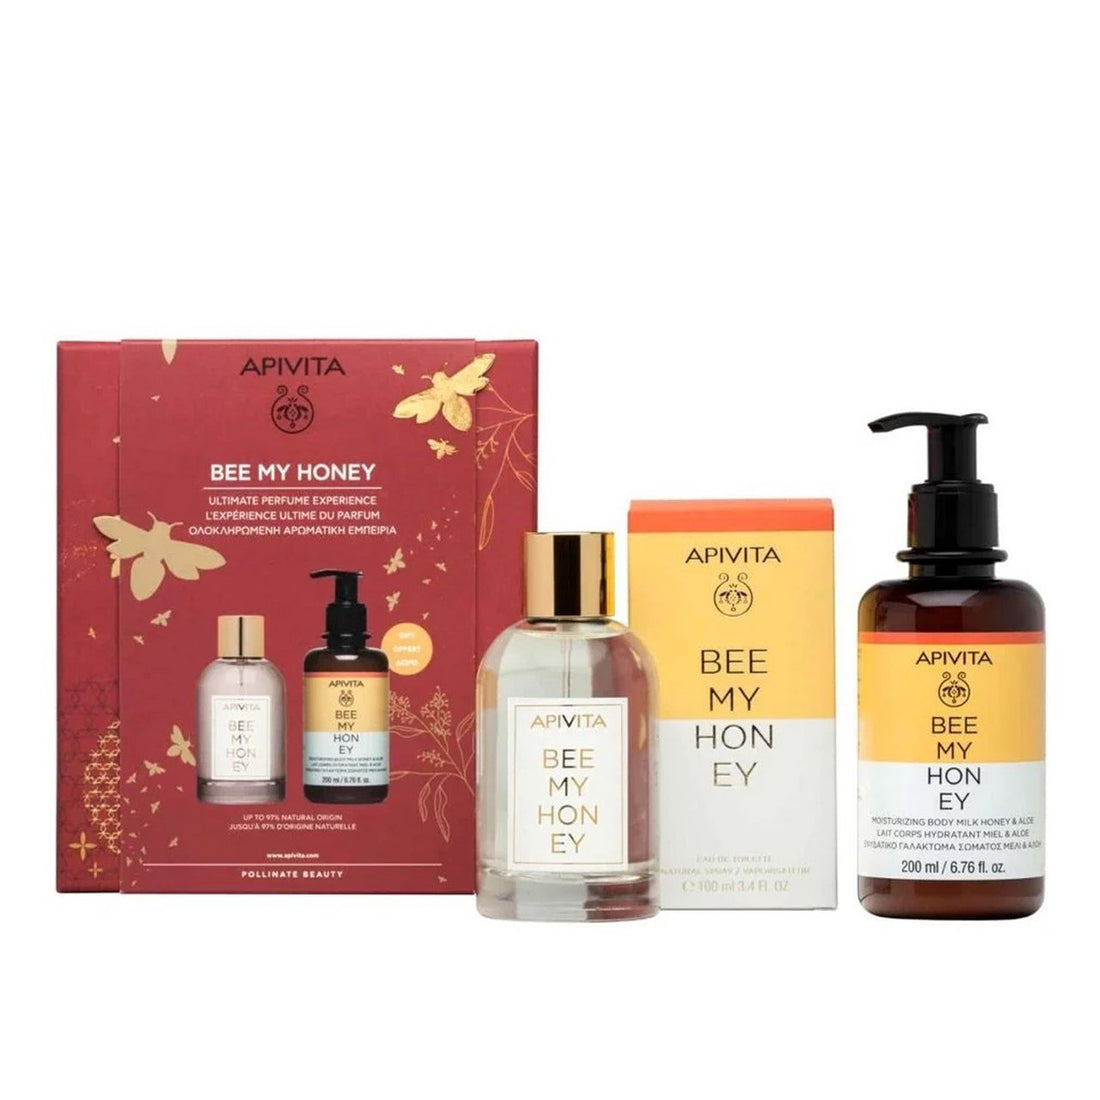 Apivita Bee My Honey Ultimate Perfume Experience Kit